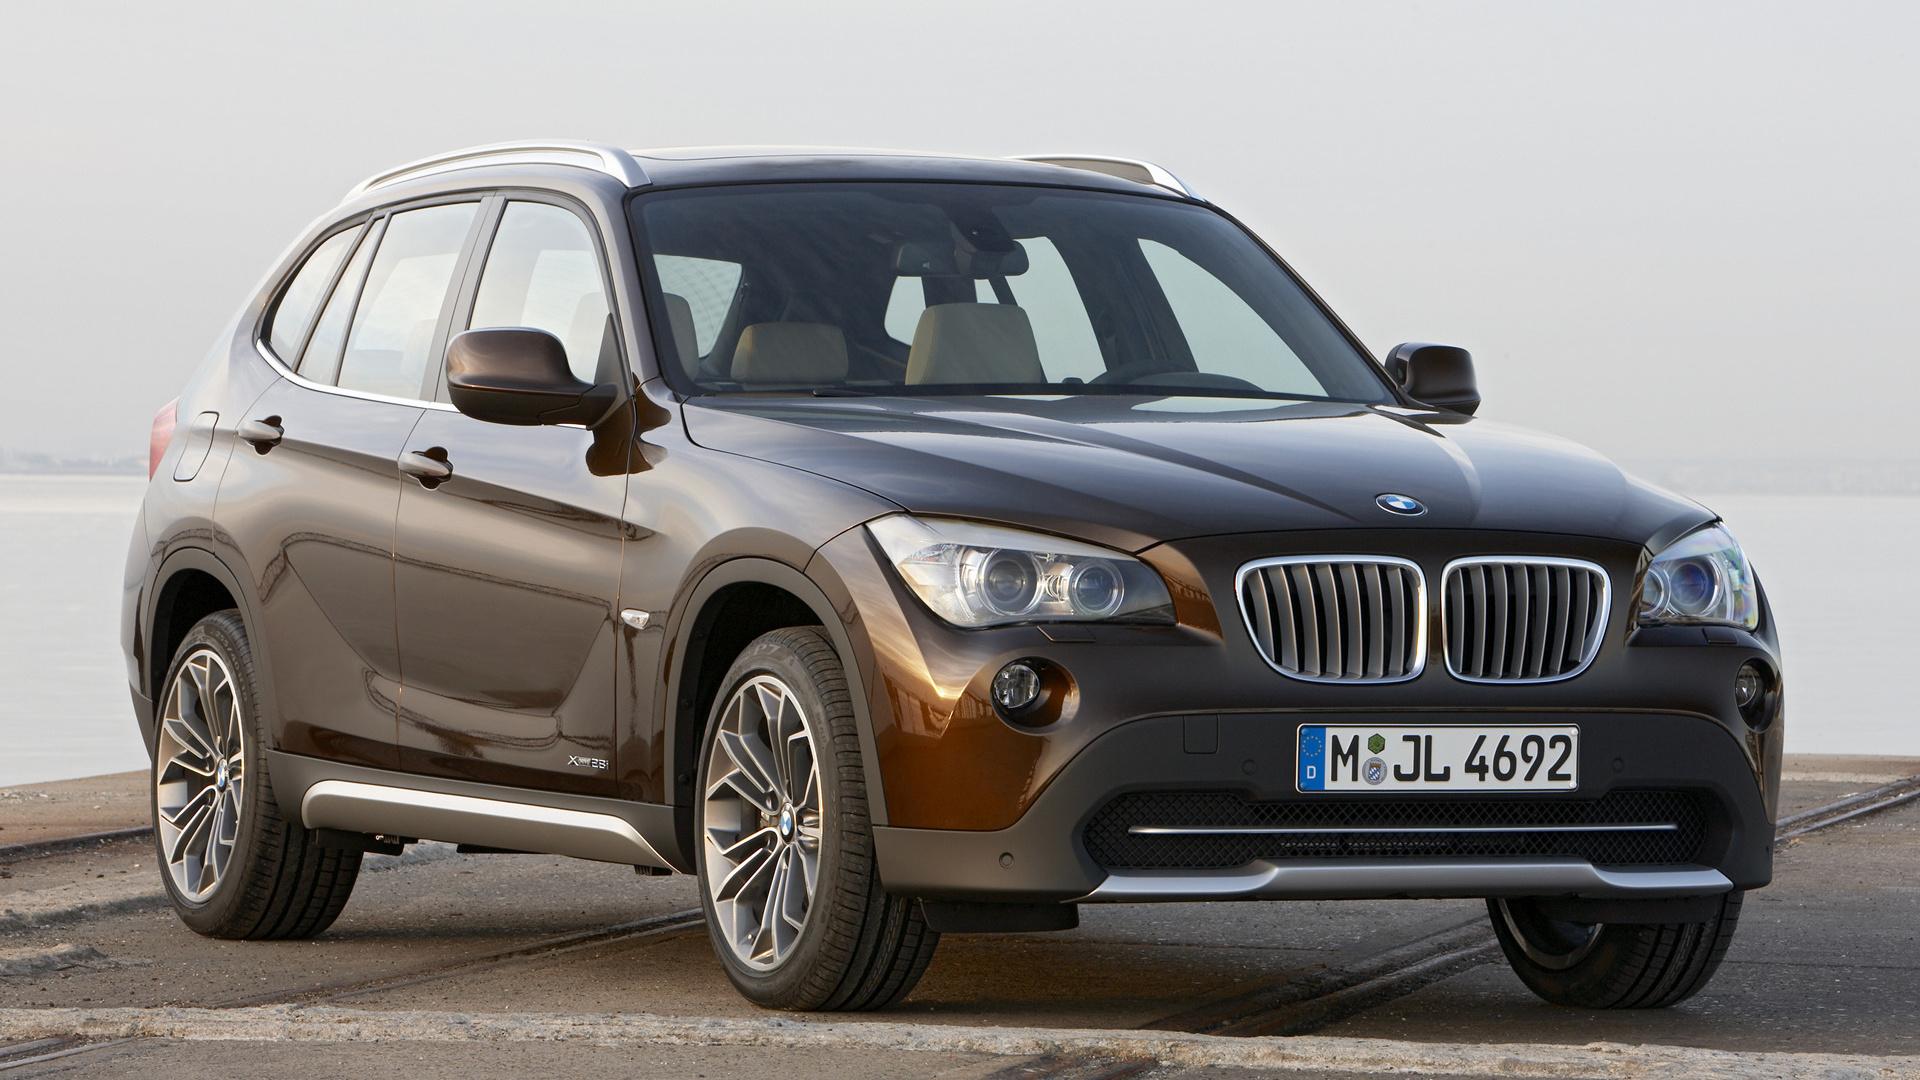 BMW X1 and HD Image